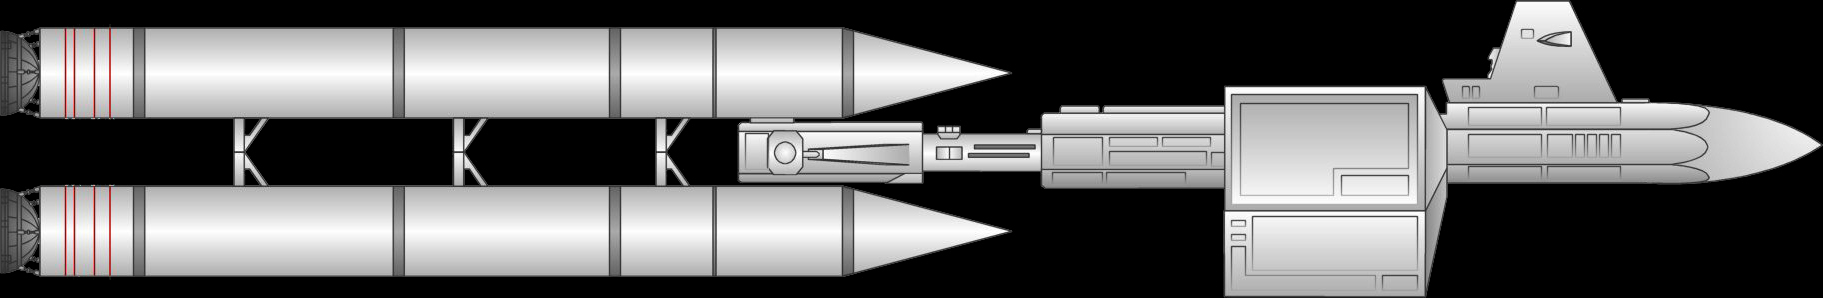 DY-100 Launcher